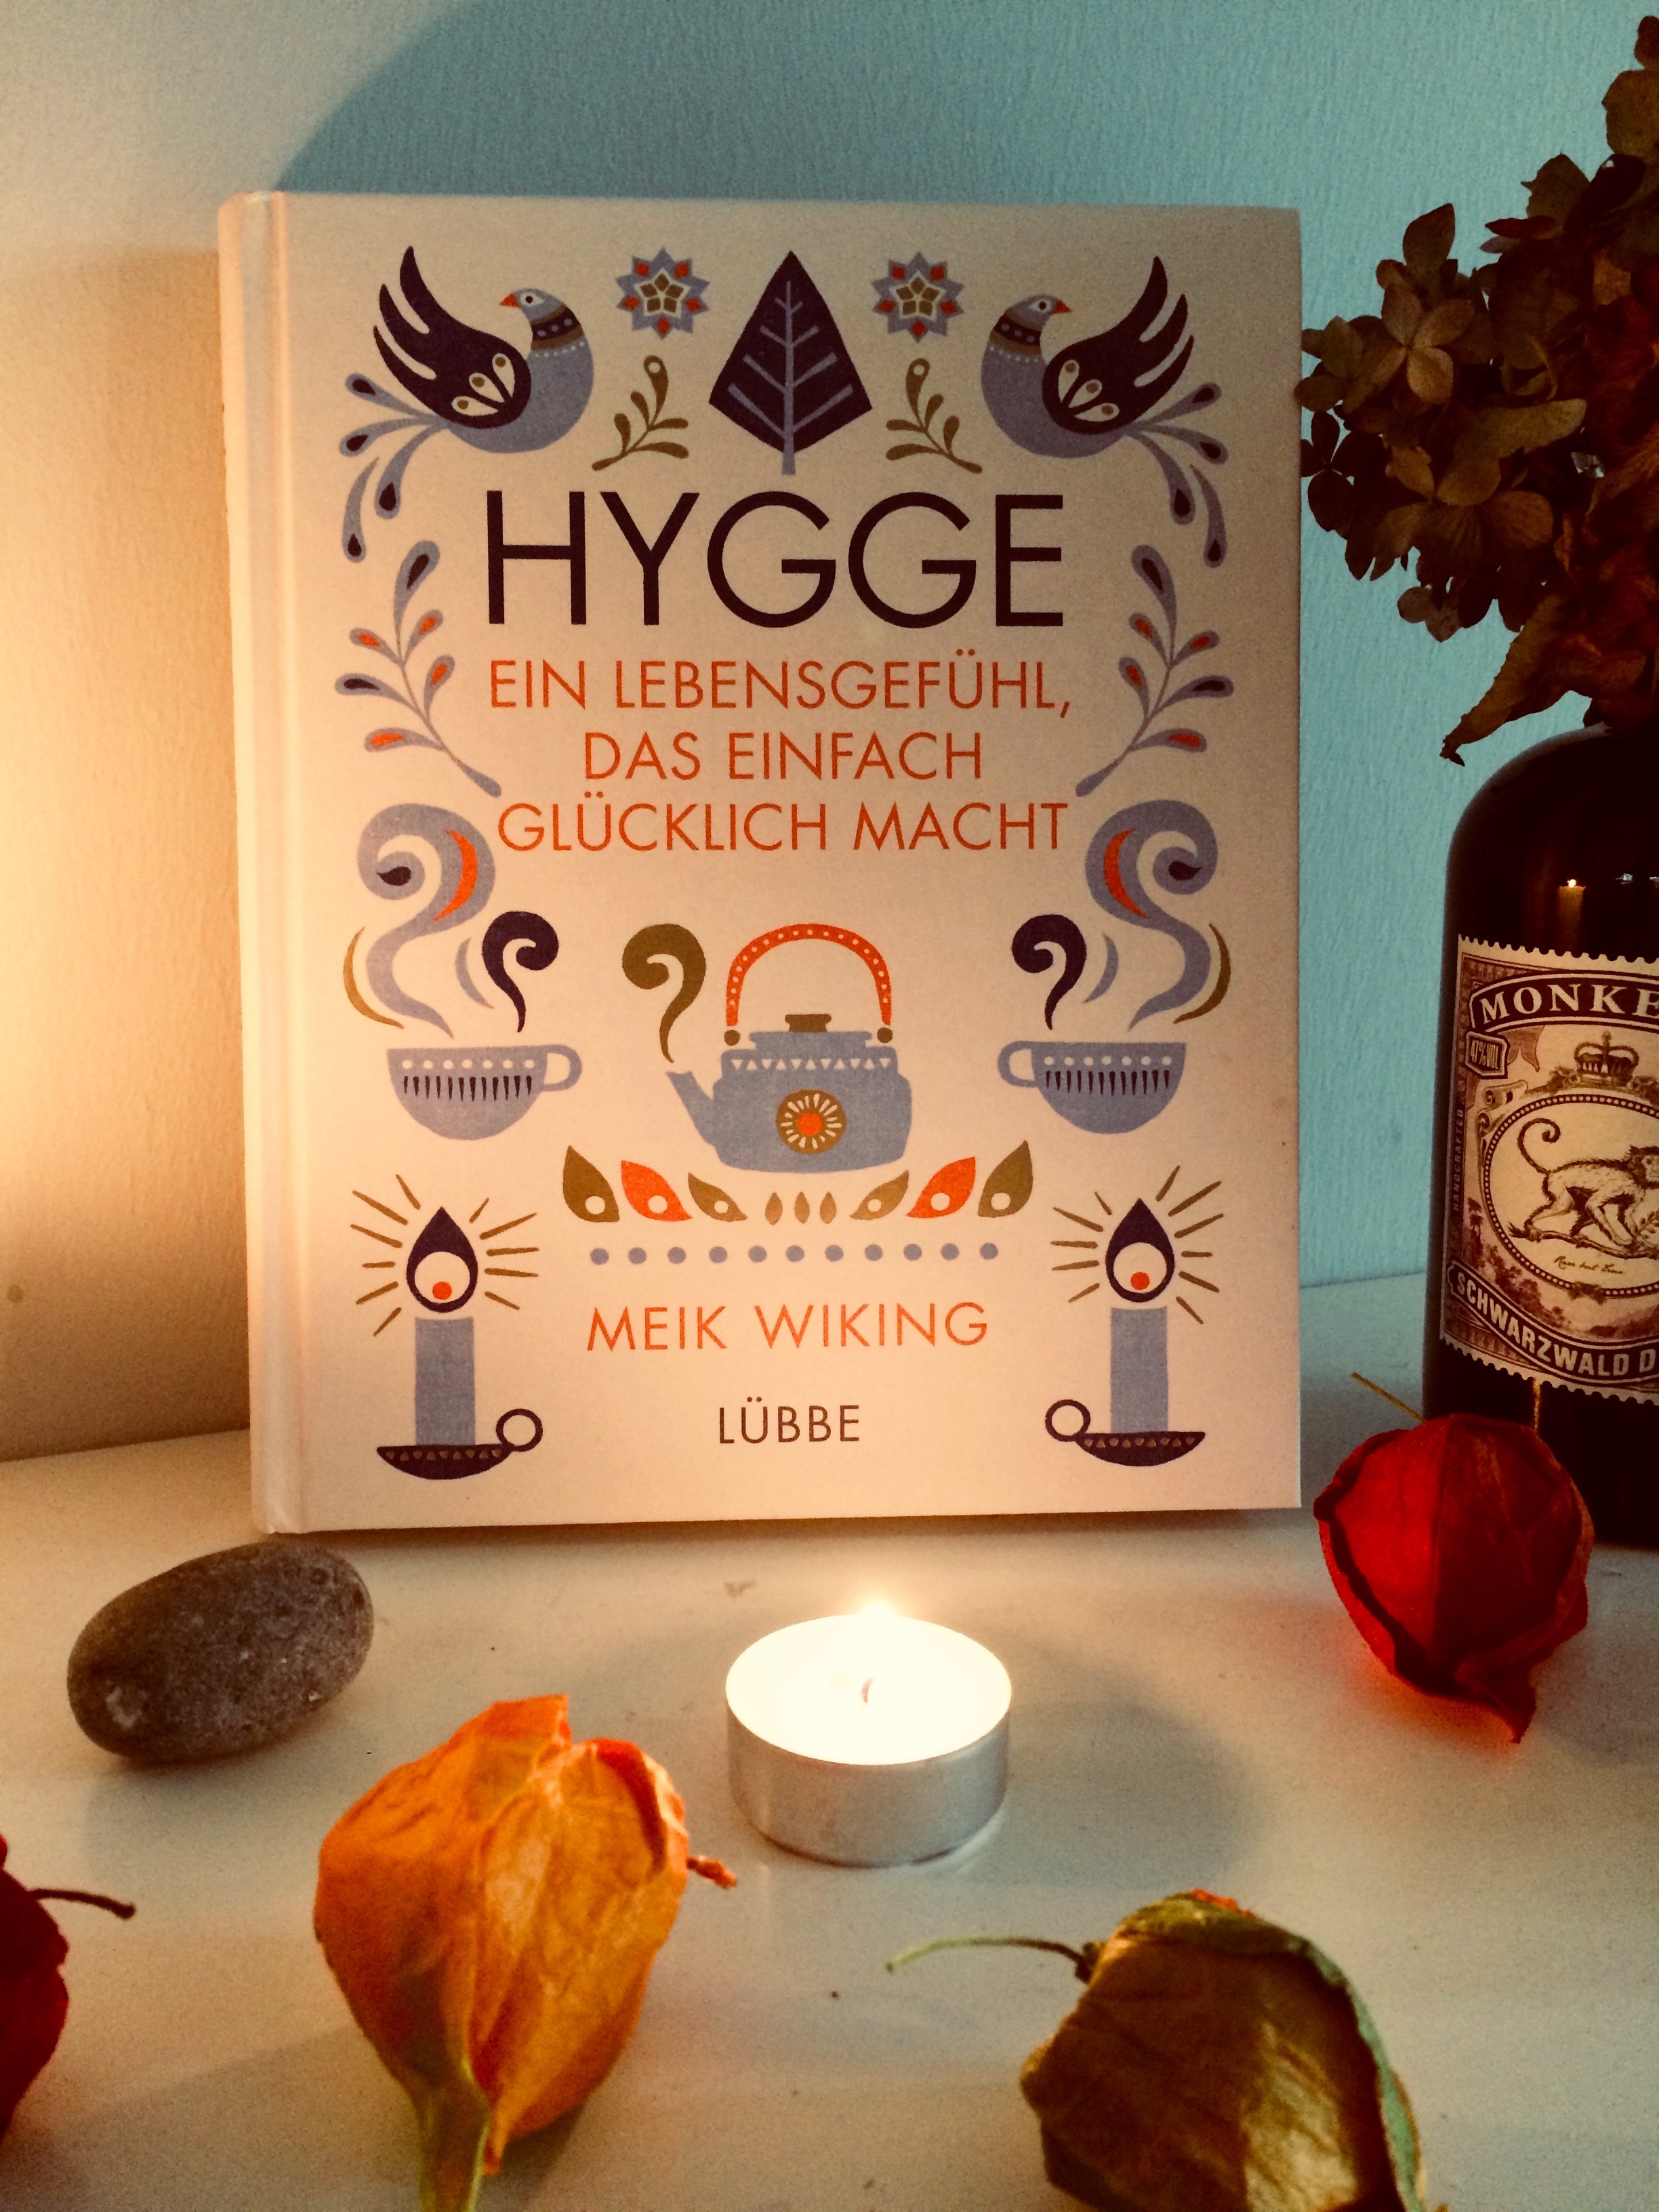 Hygge Buch Cover Kerzen Lübbe Verlag Lebensgefühl Herbst Gemütlich